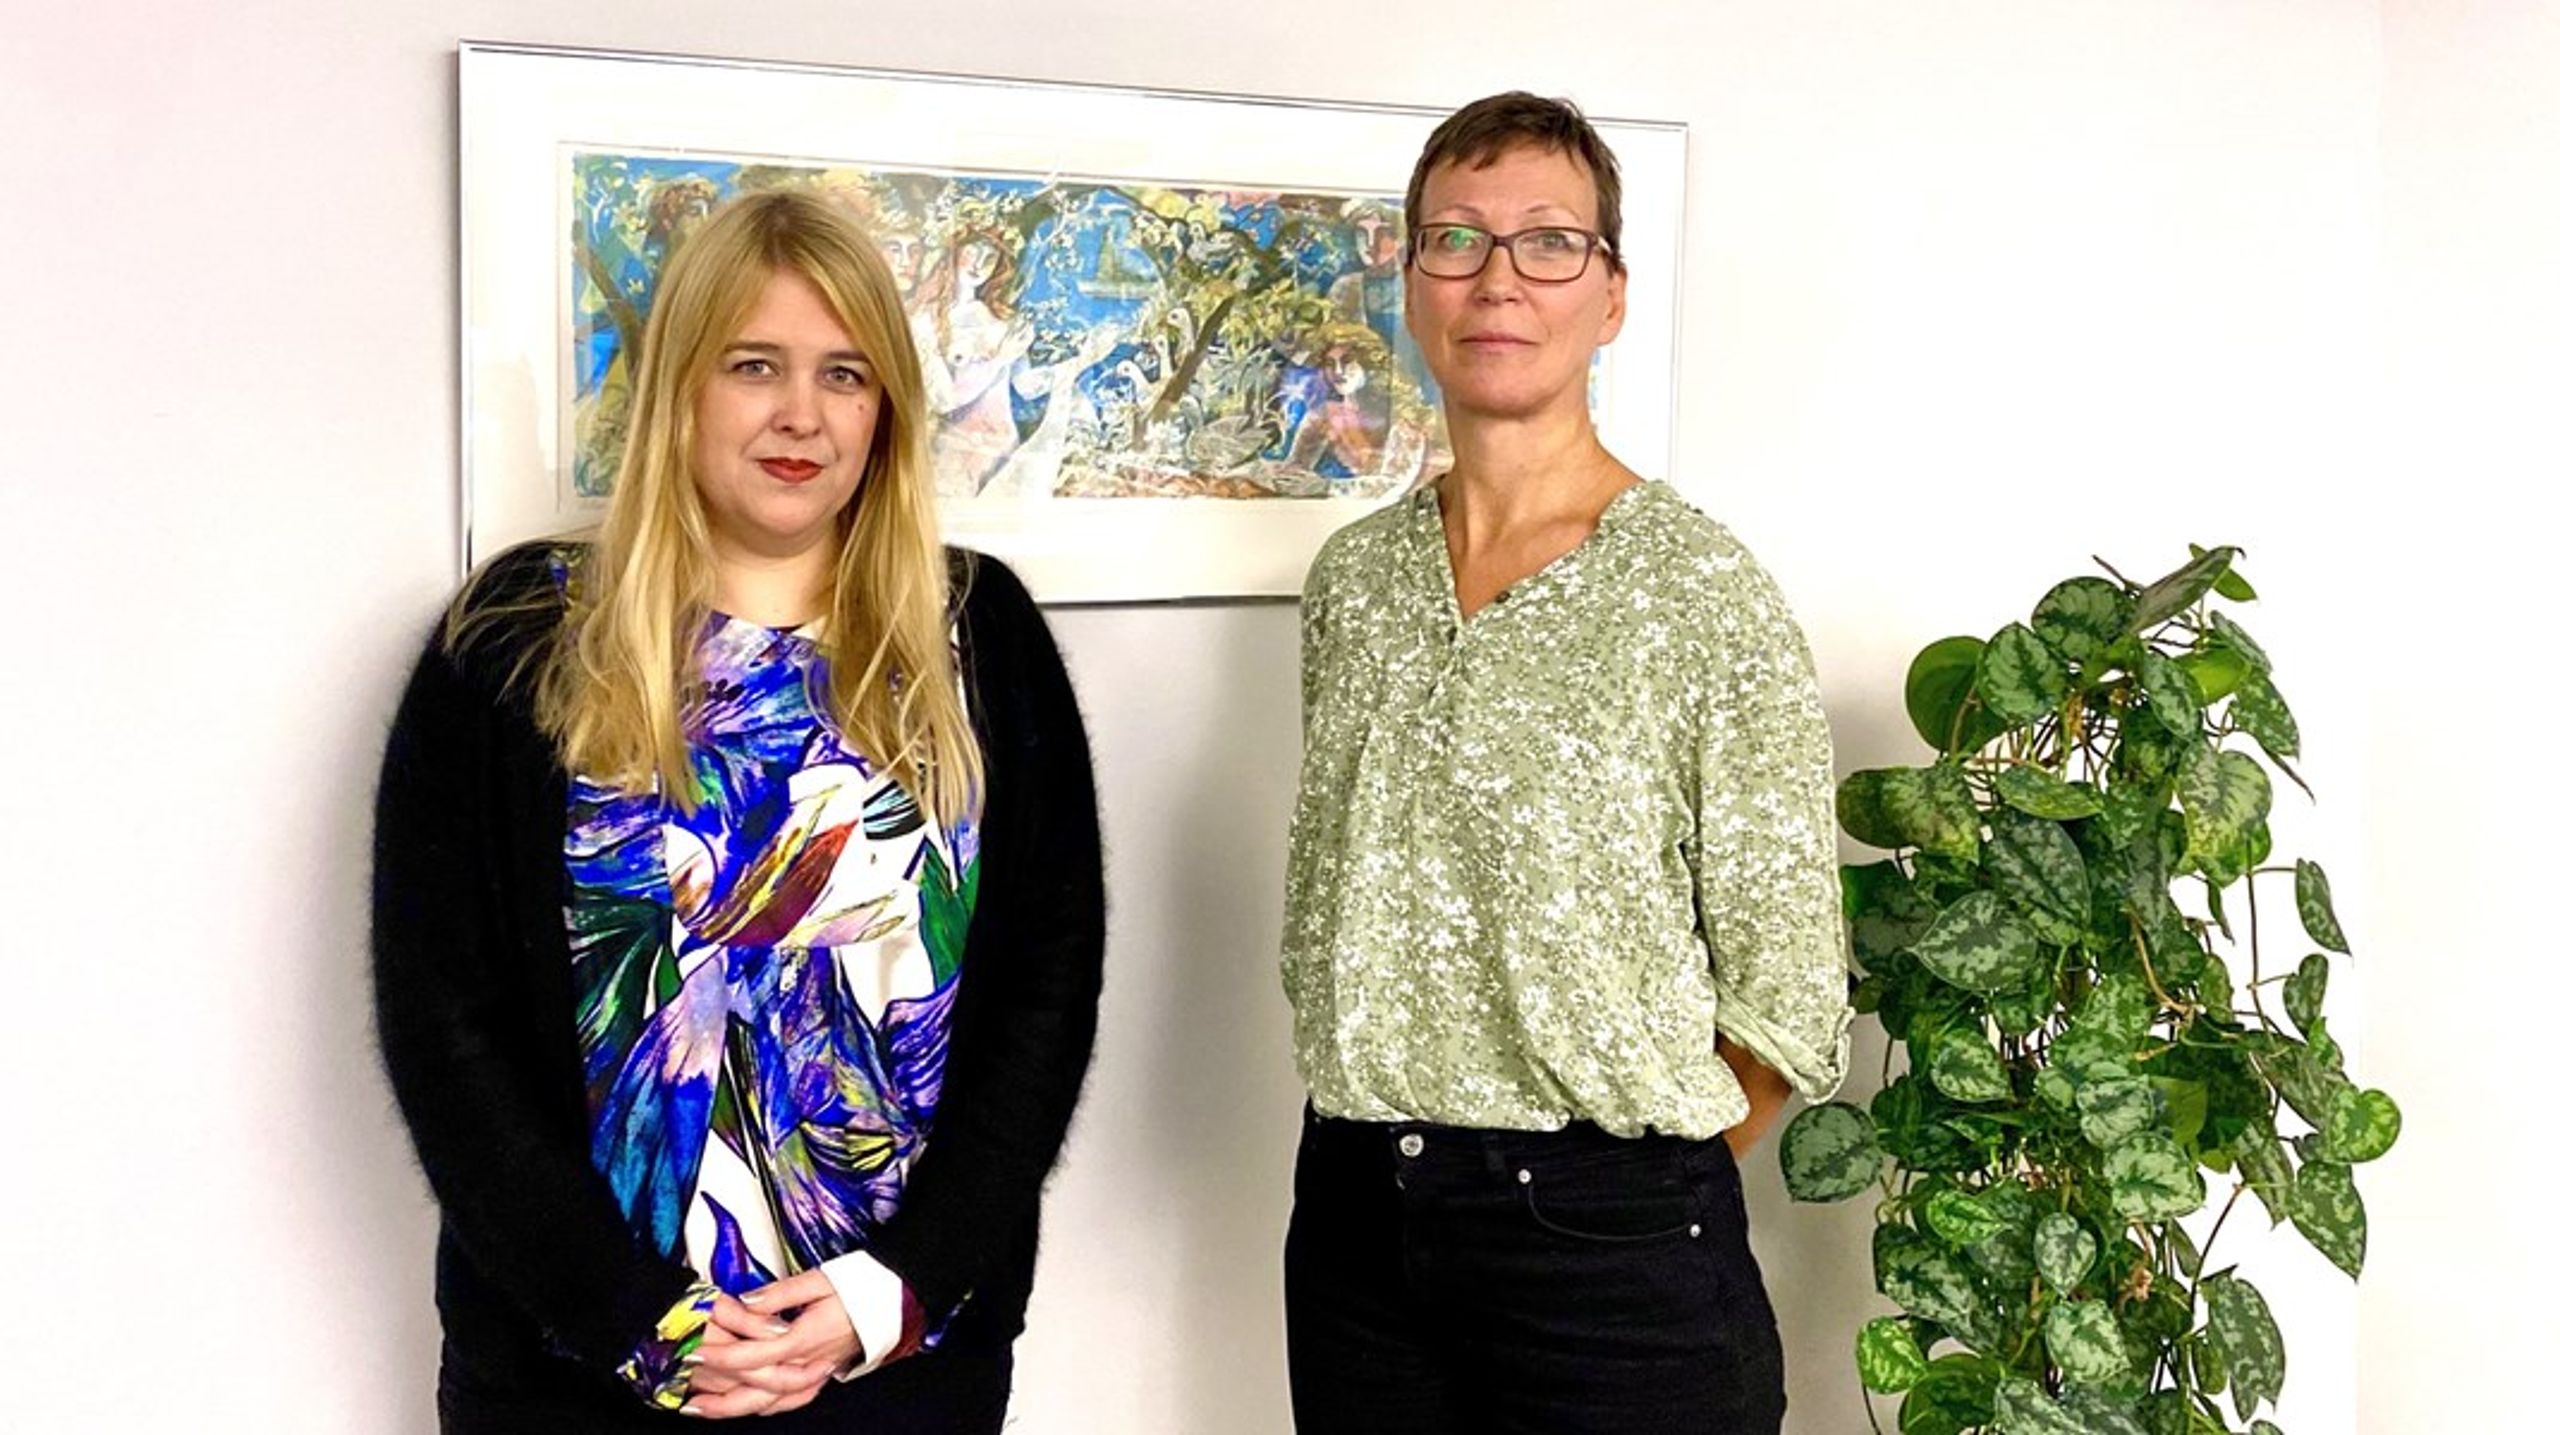 Inger Synnøve Moan og Ingeborg Lund er seniorforskere i FHI og tillitsvalgte for henholdsvis Forskerforbundet og NTL. De frykter at rus- og tobakksforskningen vil bli skadelidende når det skal flyttes 20 årsverk på folkehelsefeltet fra FHI til Helsedirektoratet.